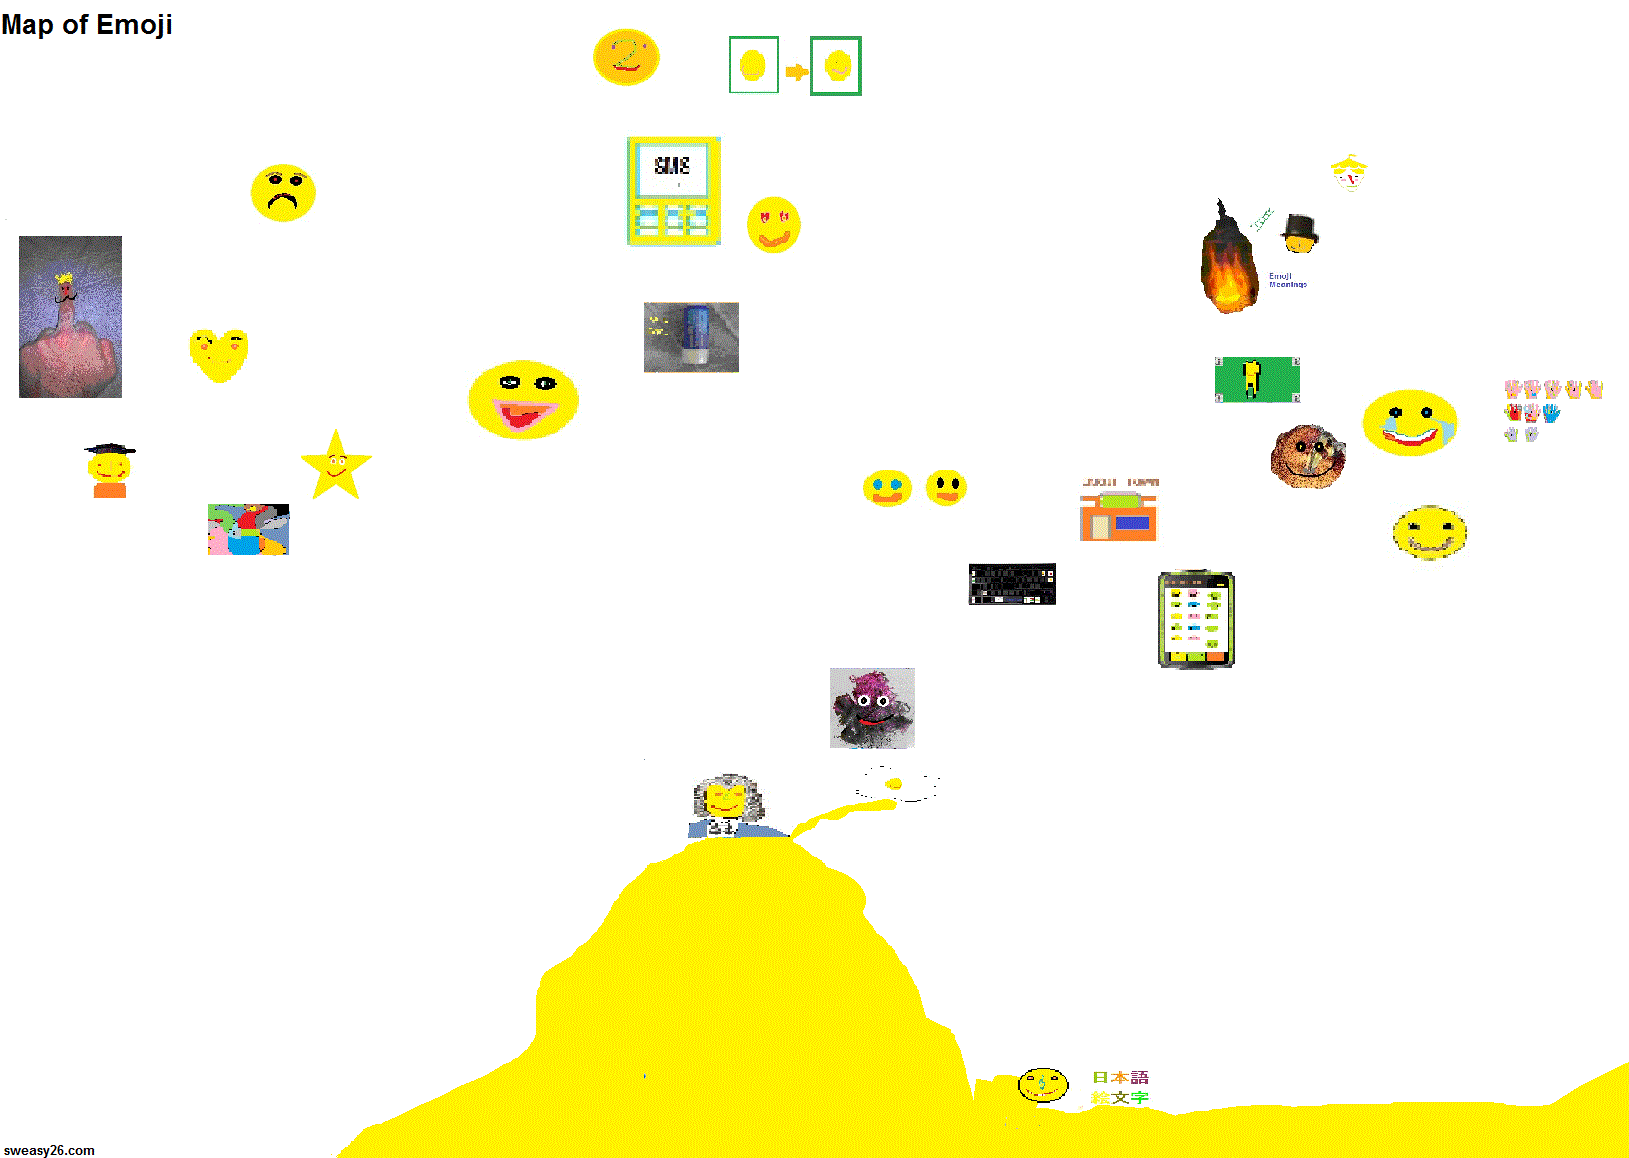 Map of Emoji